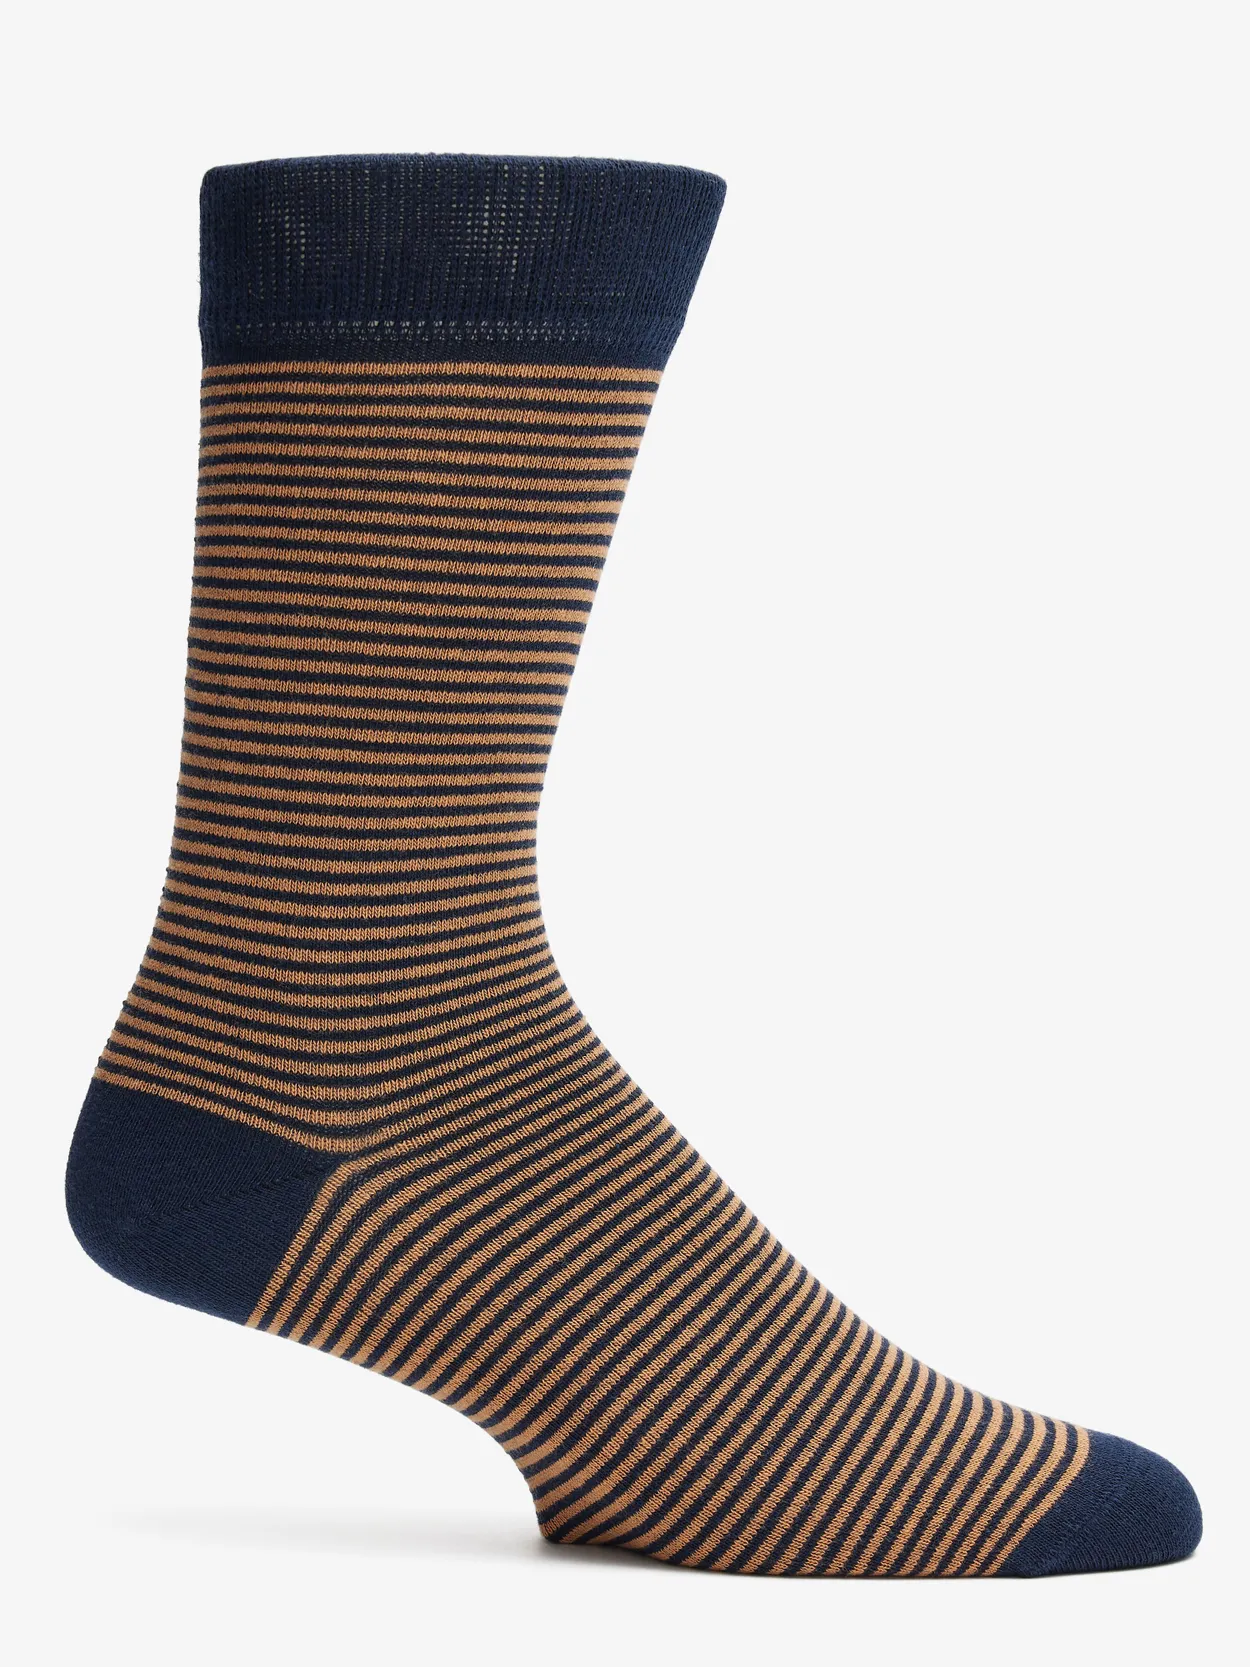 Socks Almeria Blue & Brown